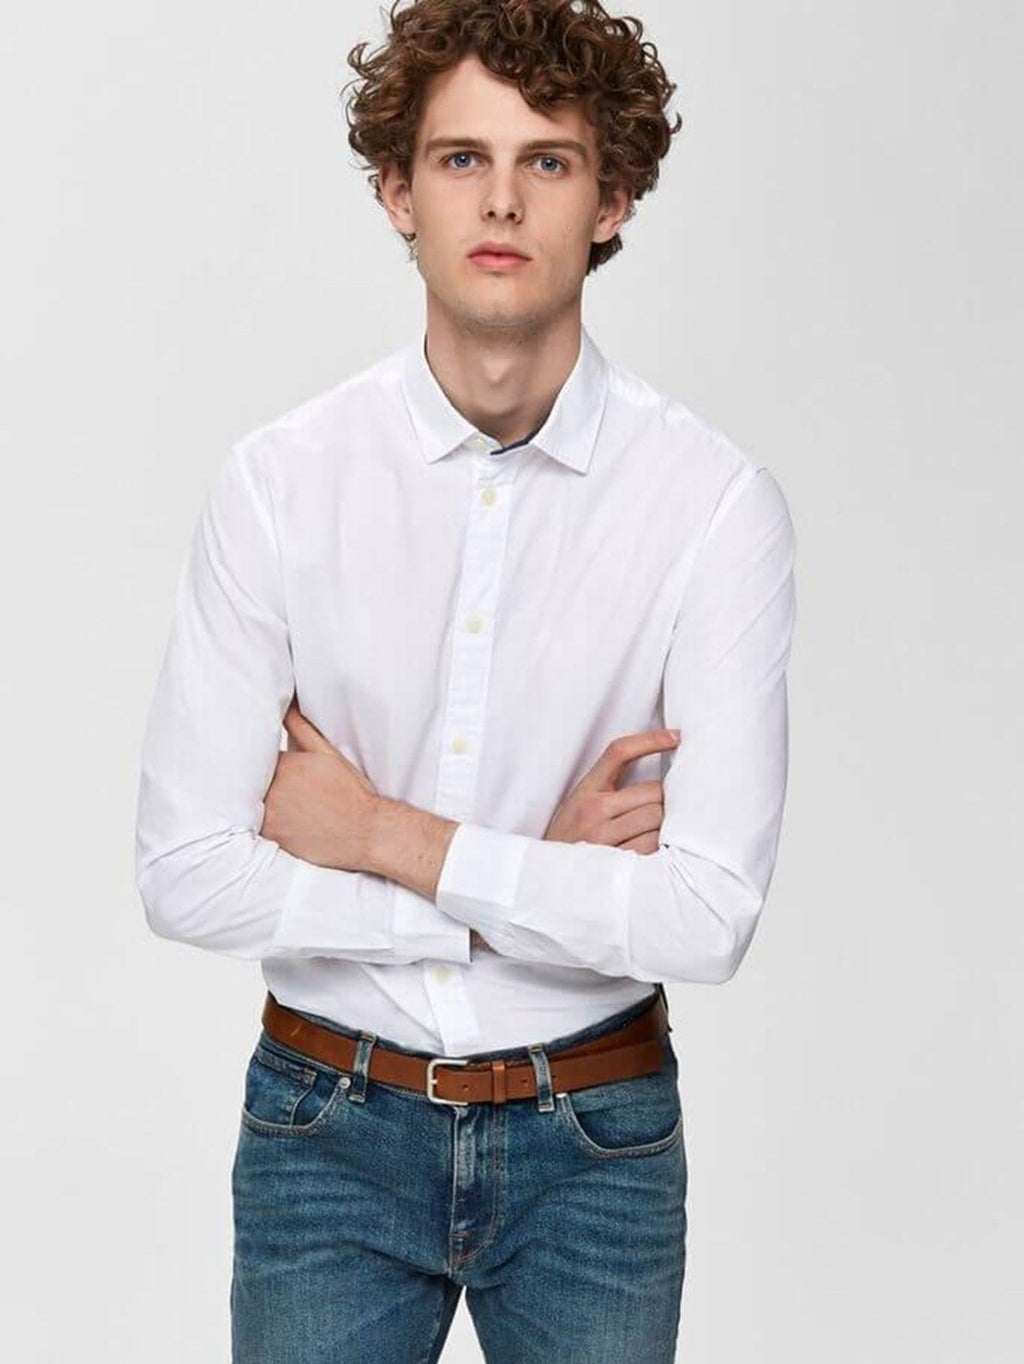 Oxford Shirt - White